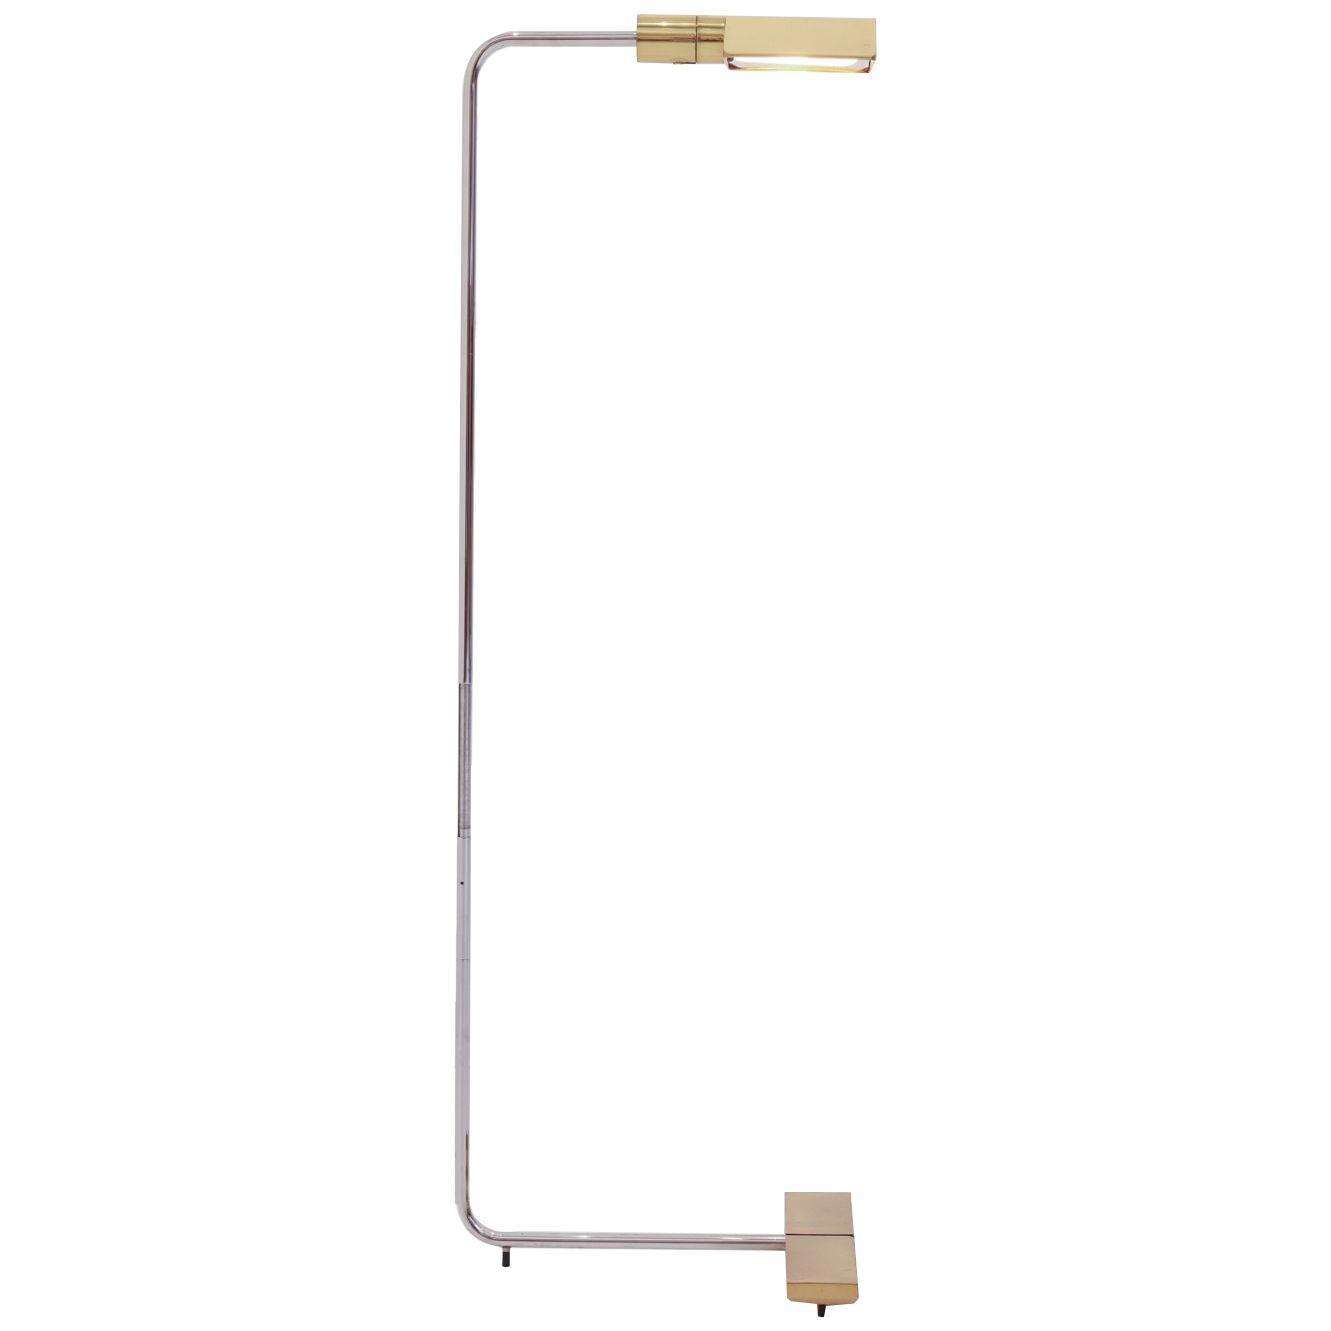 1UWV Low Profile Chrome/Lacquer Brass Luminaire Swivel Lamp by Cedric Hartman